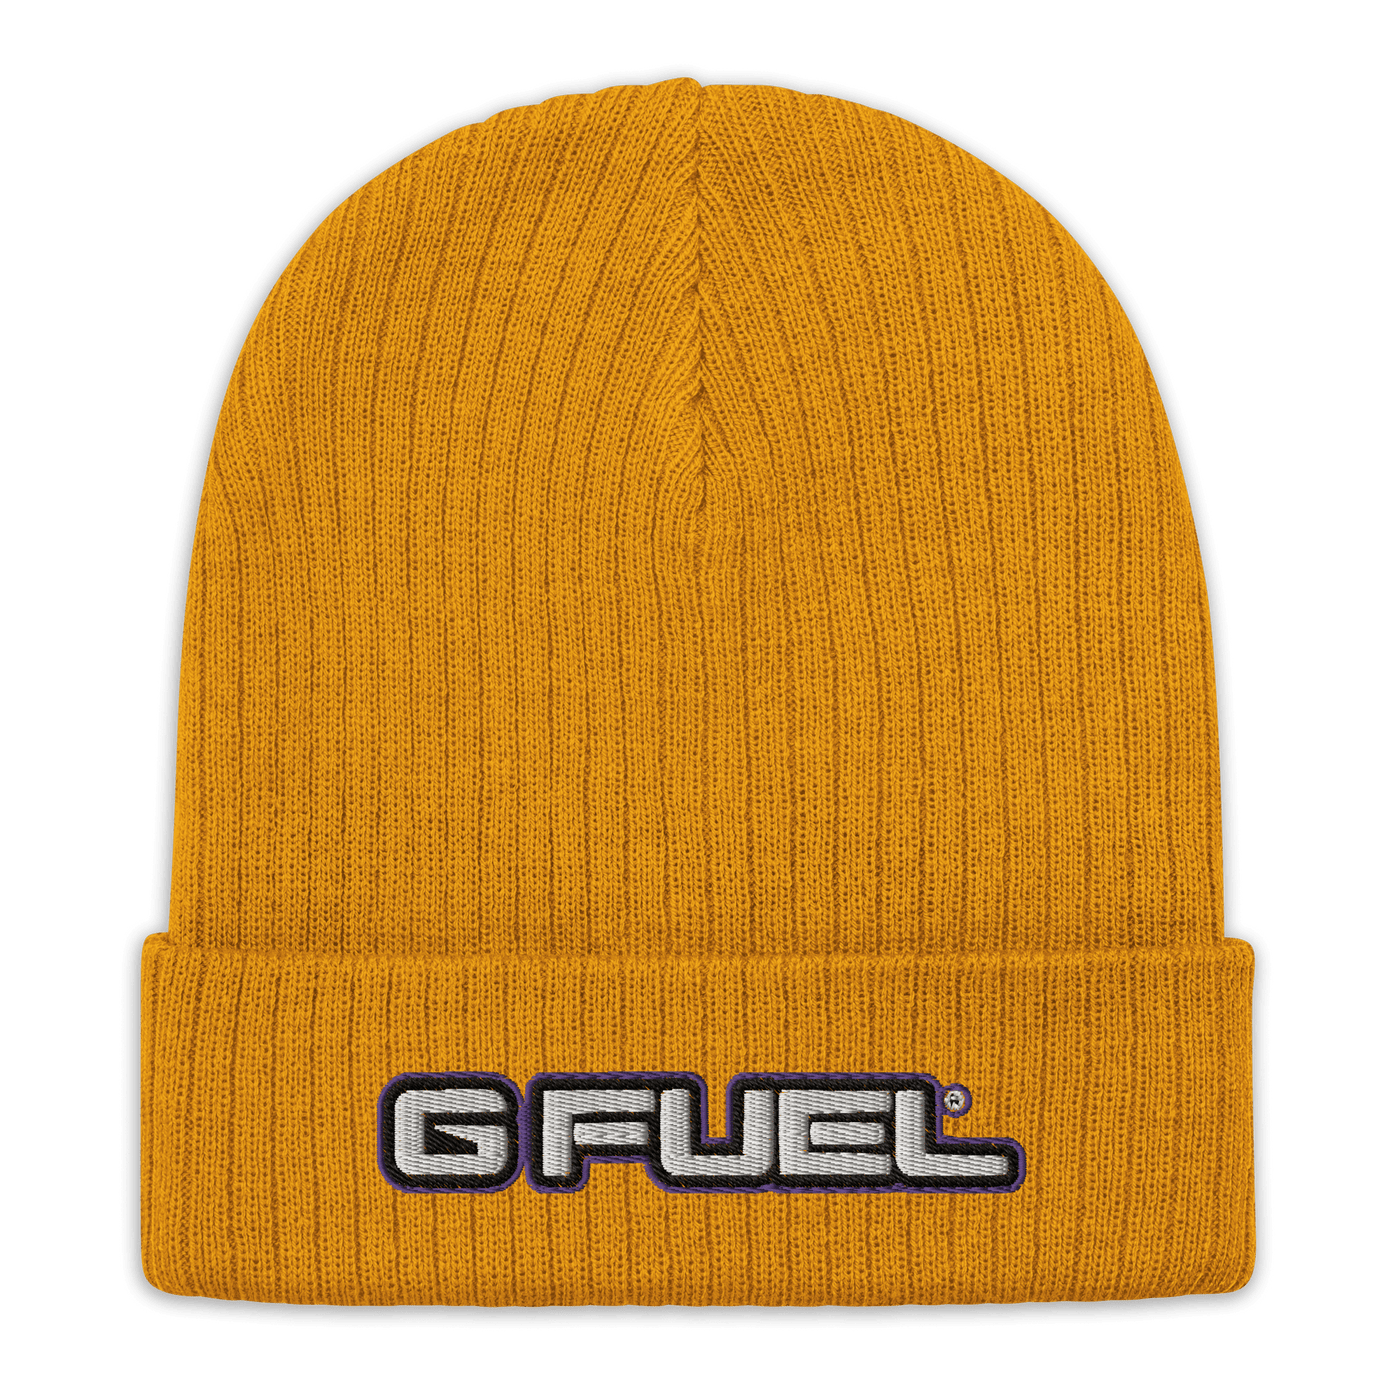 G FUEL| G FUEL Logo Ribbed Knit Beanie Mustard 9680727_13240